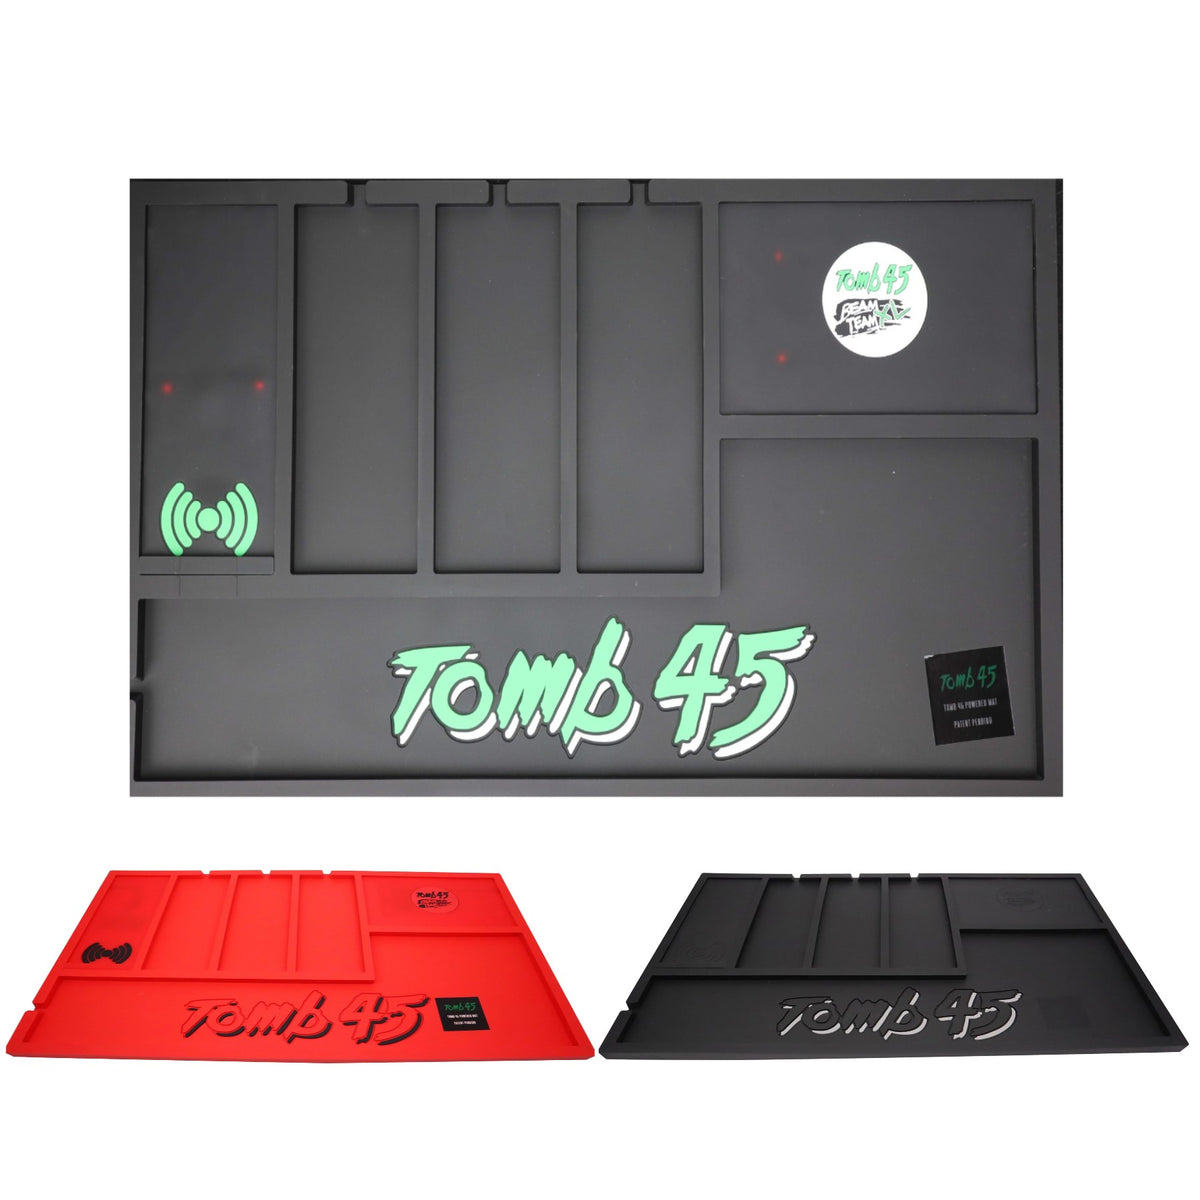 tomb 45 power mat